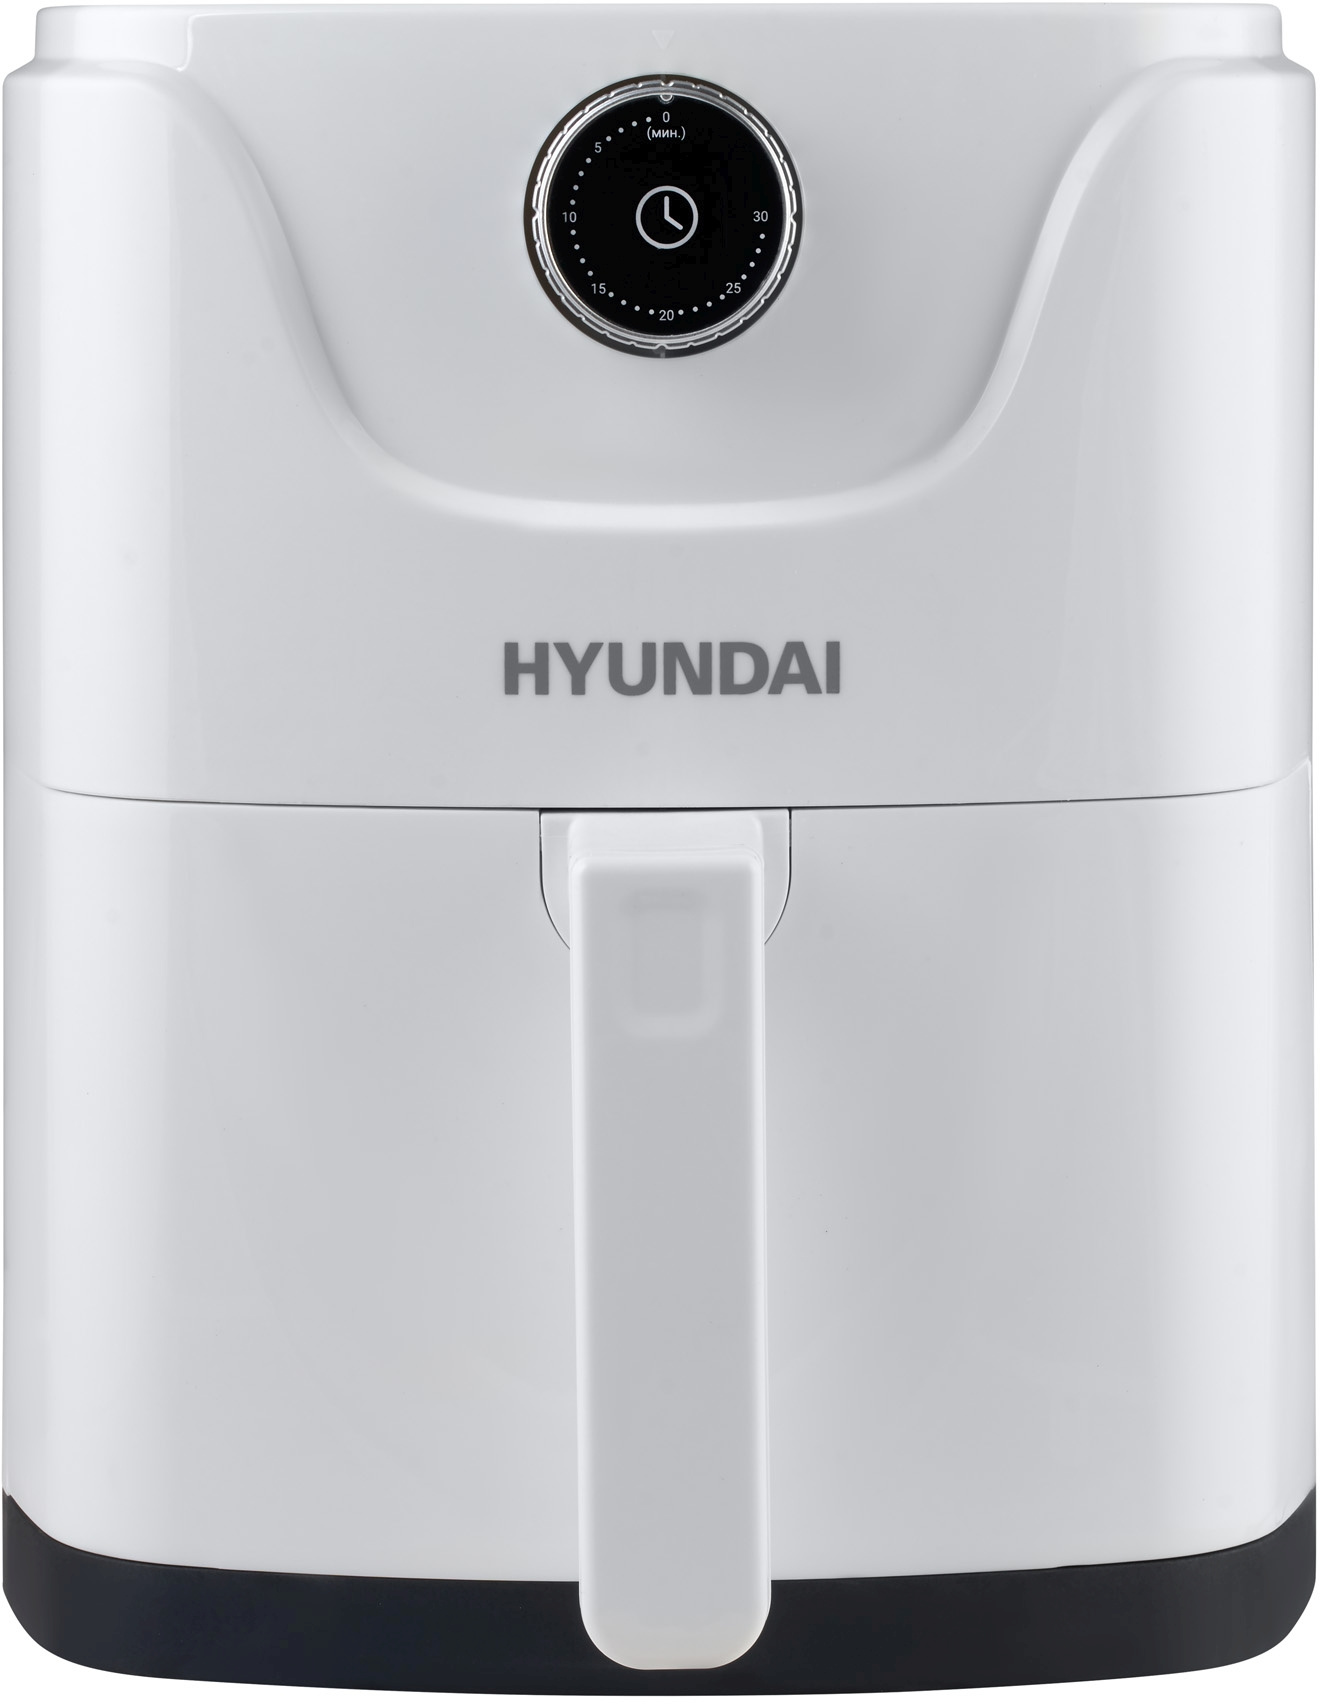 Аэрогриль Hyundai HYF-2052 1 кВт, 2.5 л, белый/серебристый (HYF-2052), цвет белый/серебристый